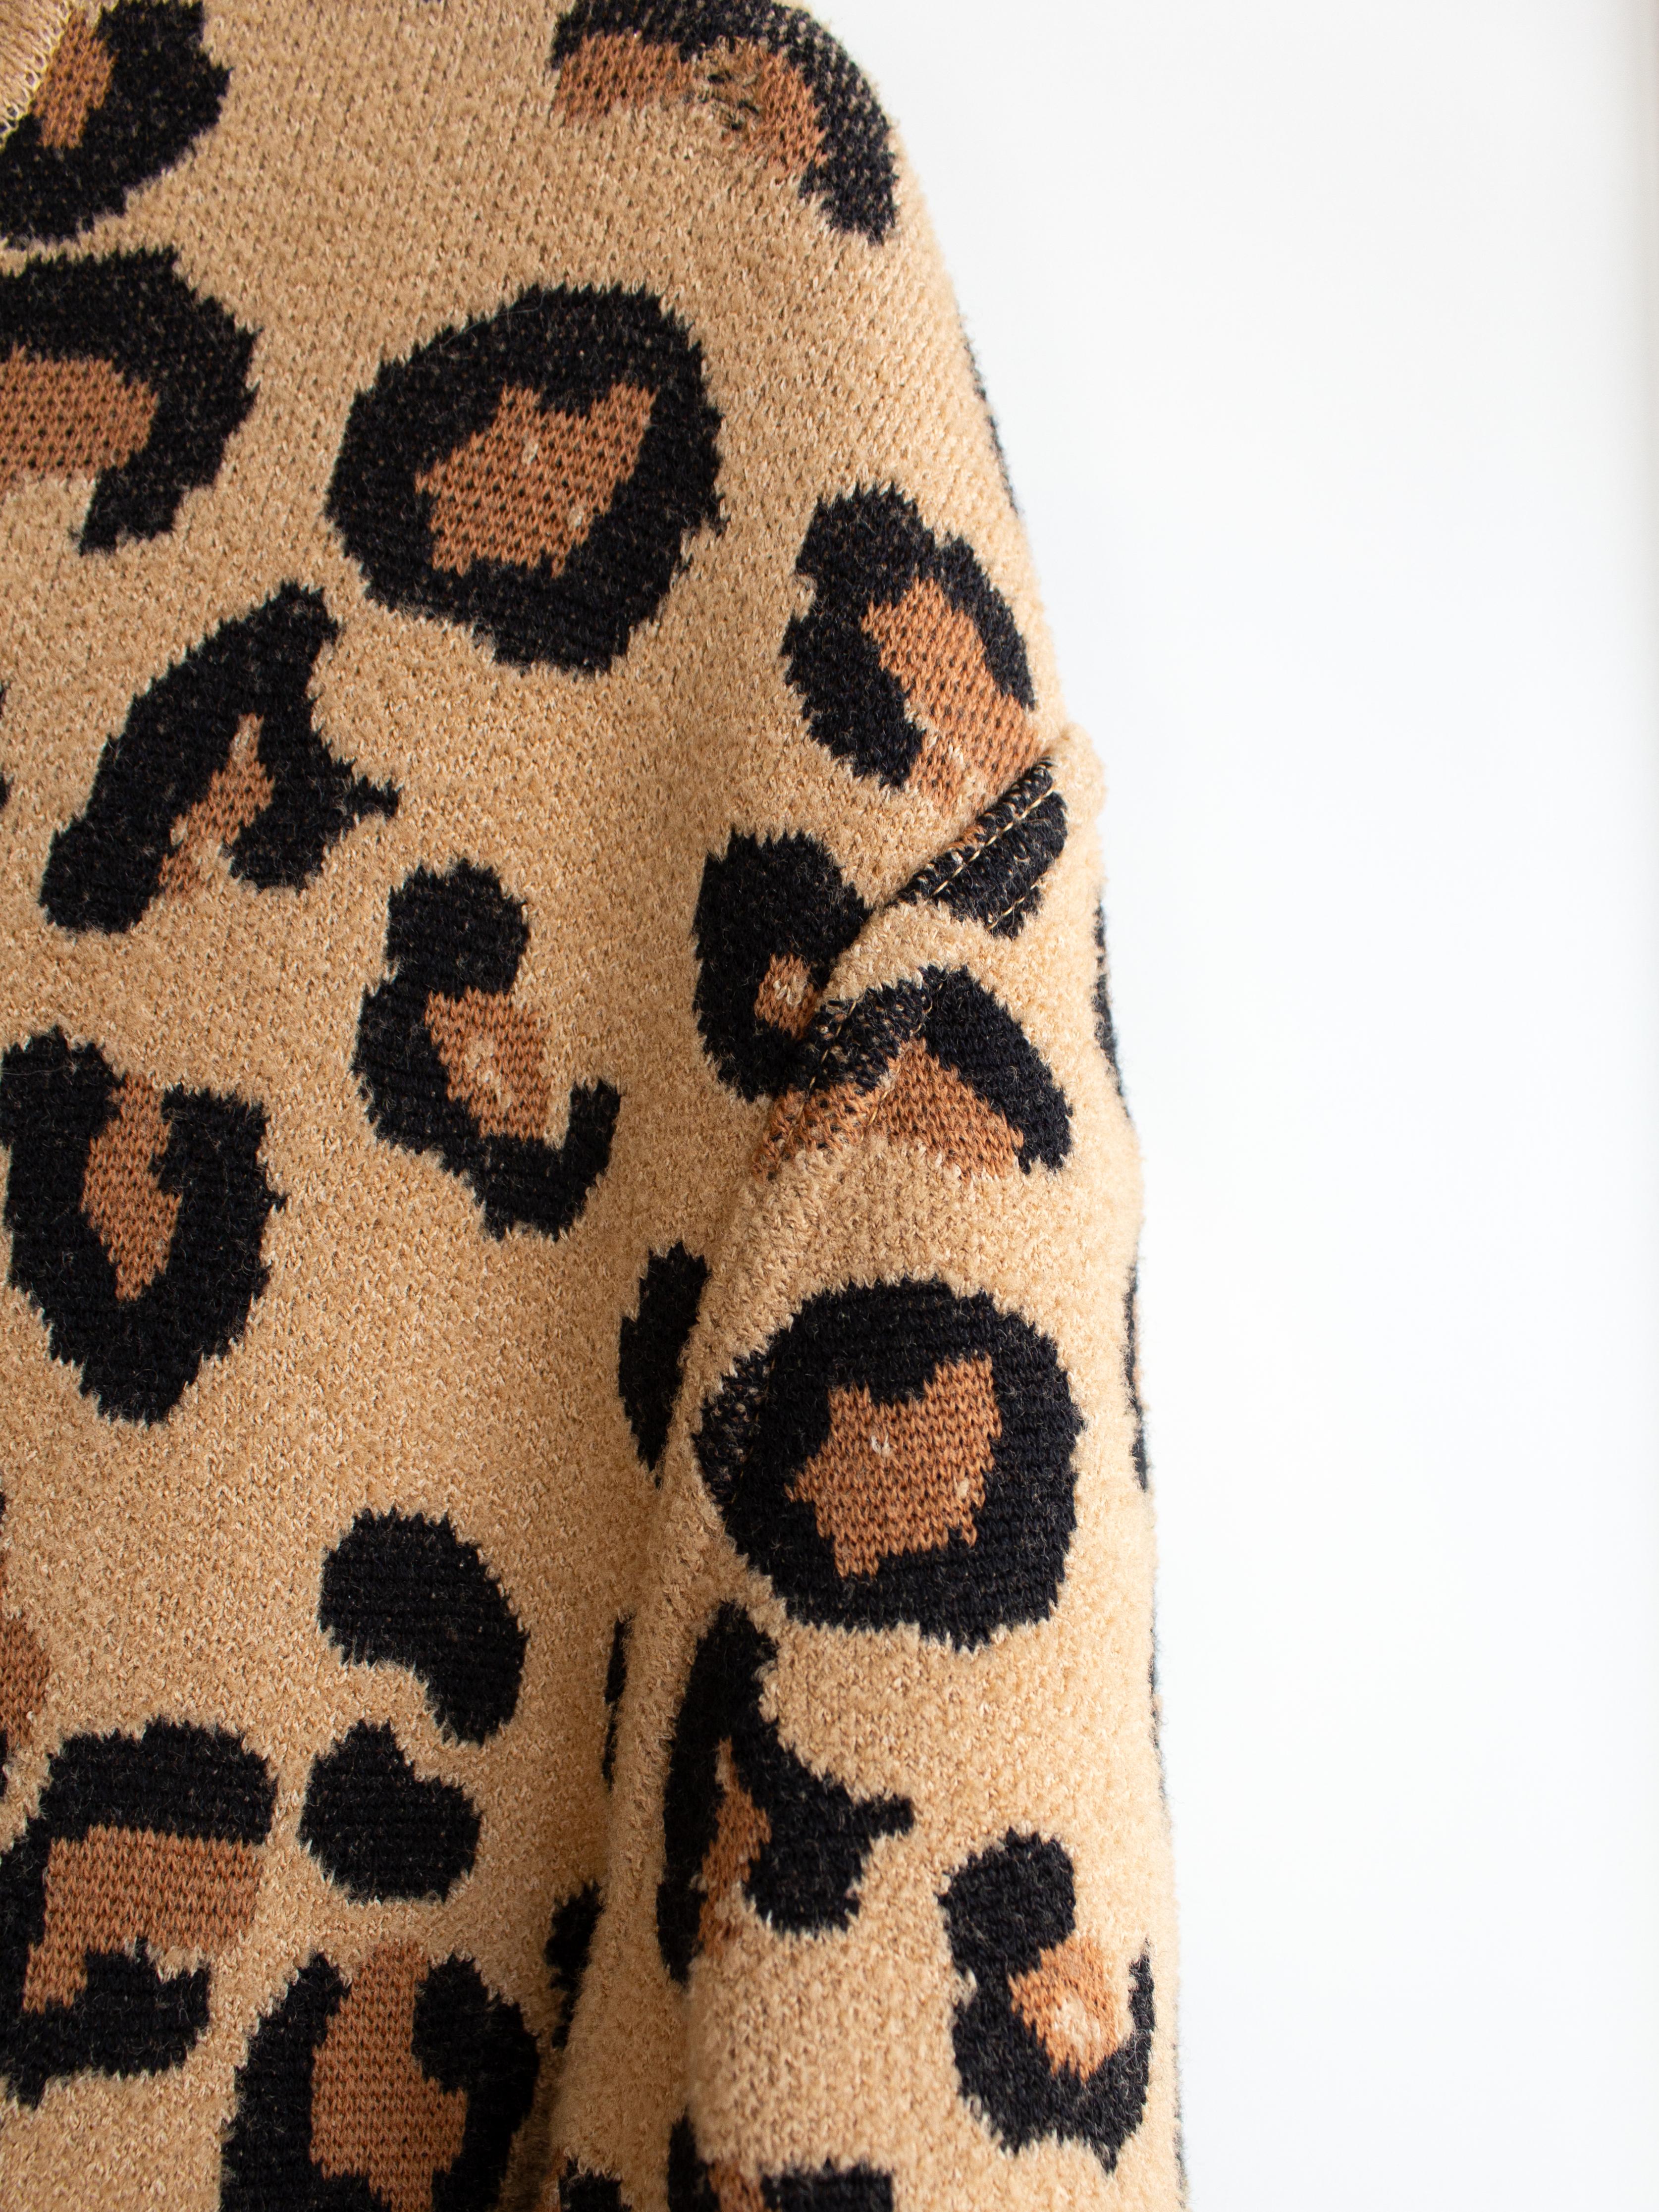 Iconic Alaia Vintage Fall/Winter 1991 Leopard Print Knit Bodycon Dress 13